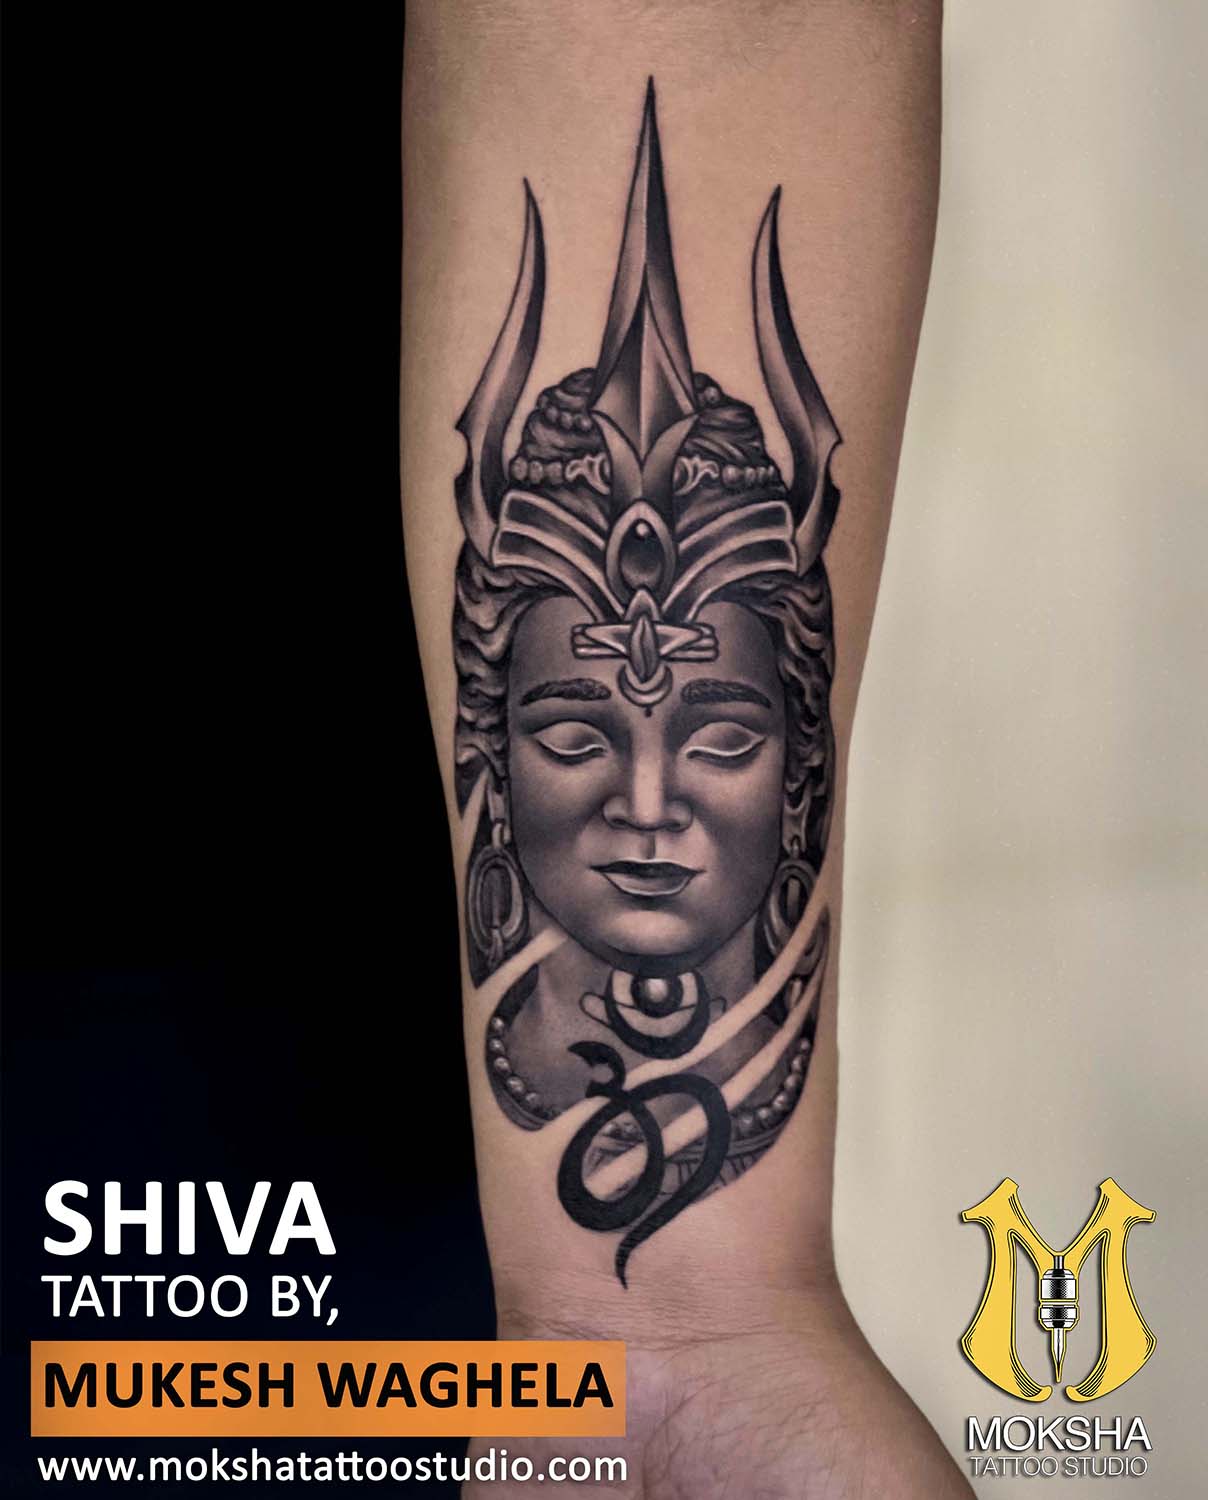 shankar Archives - Best Tattoo Studio Goa, Safe, Hygienic - Moksha Tattoo